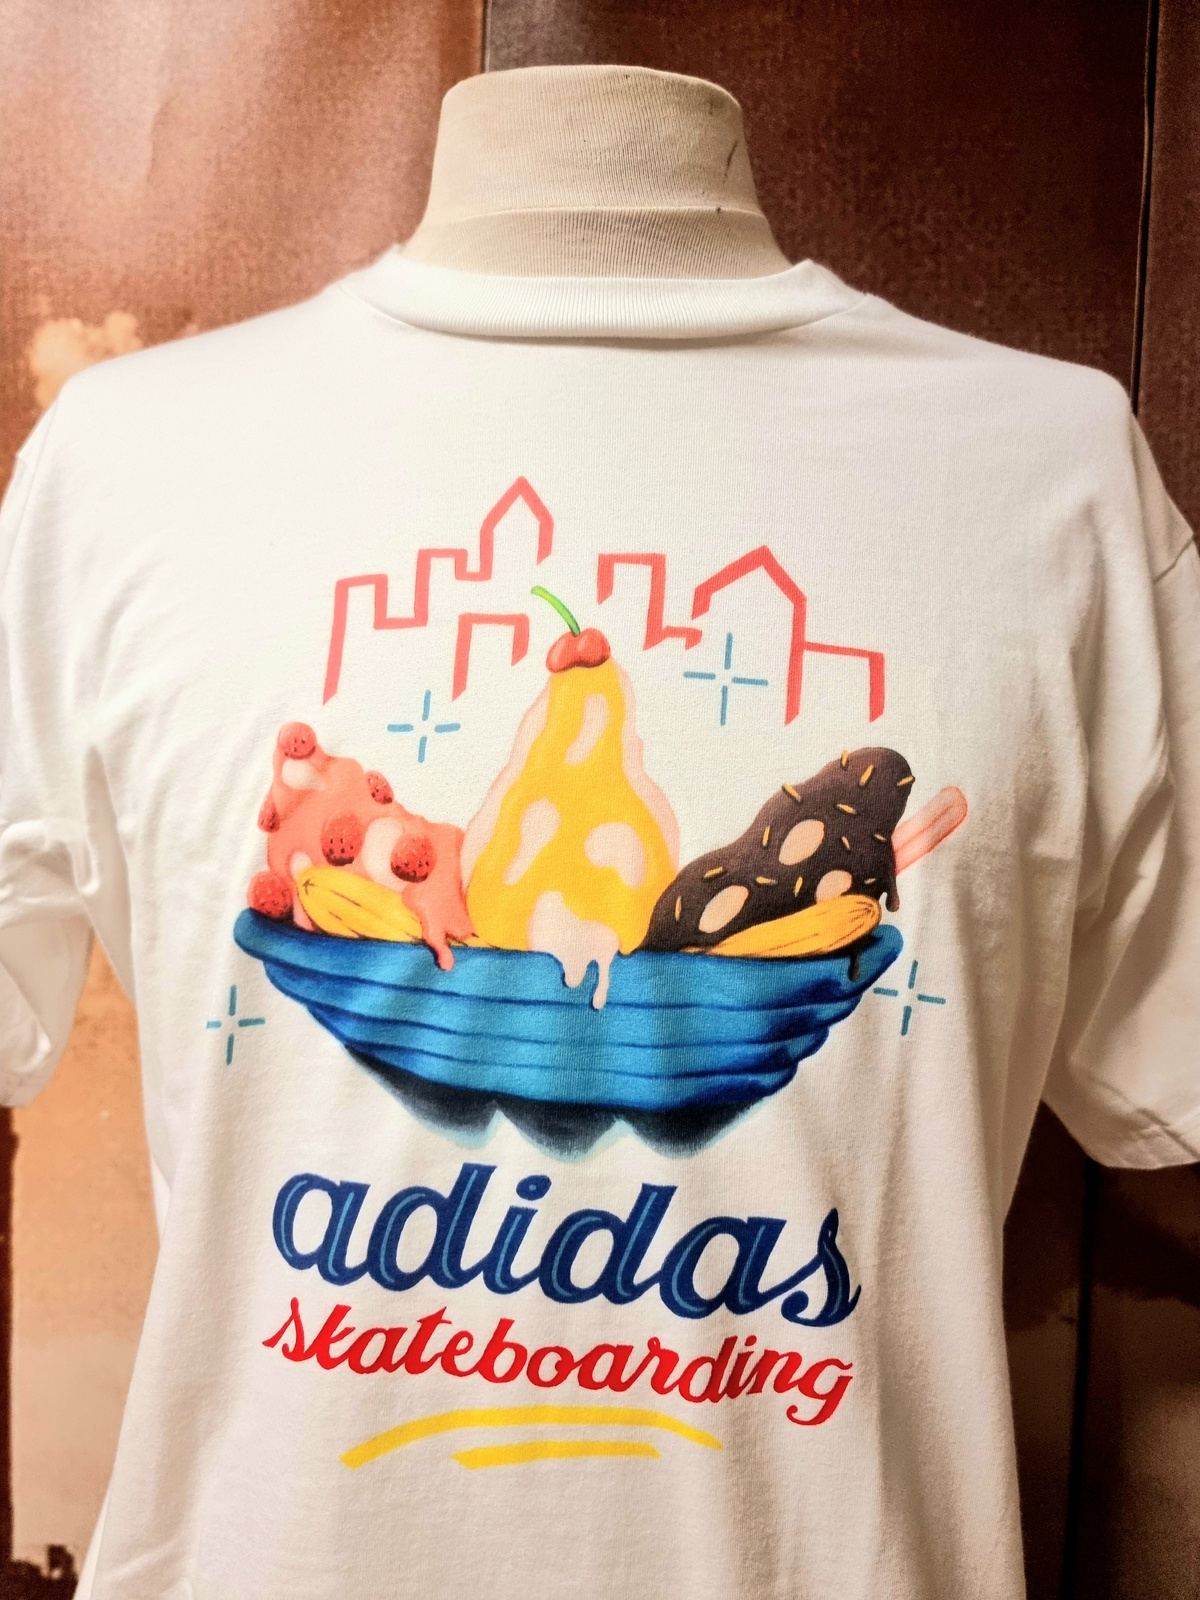 Adidas Skateboarding T-shirt